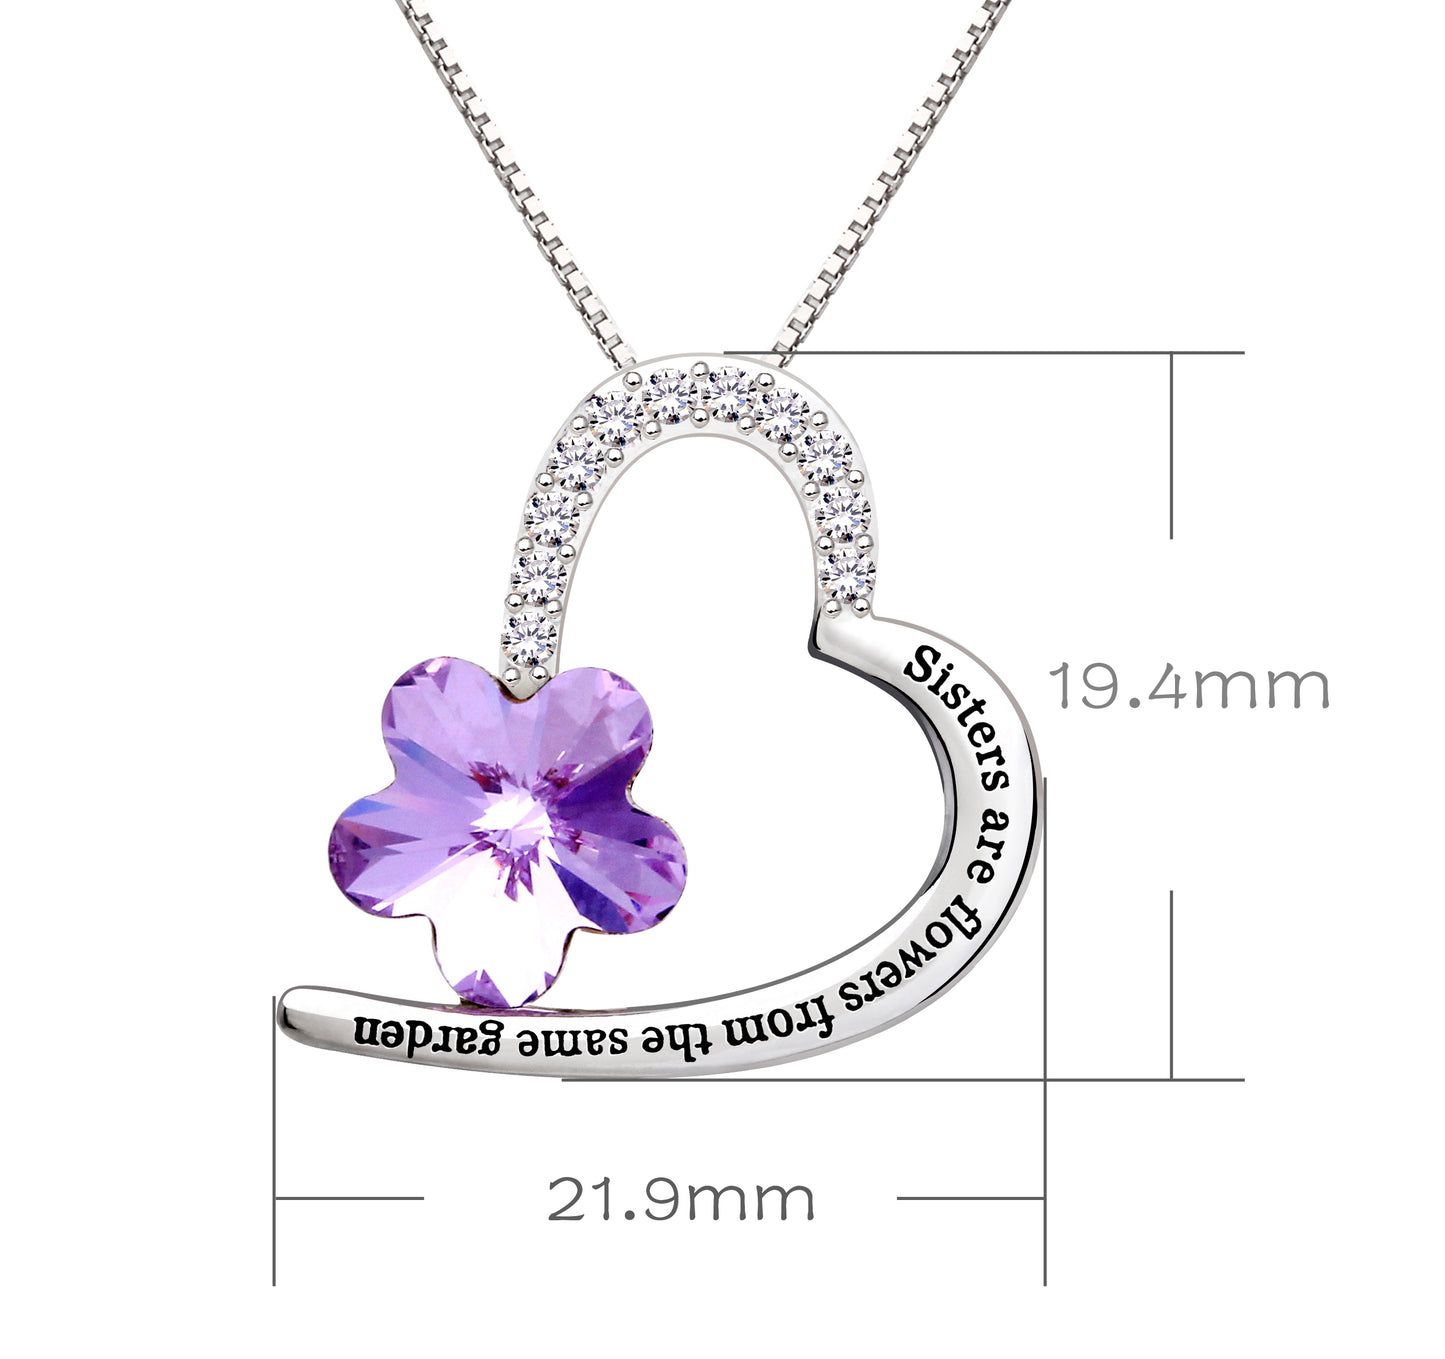 ALOV 珠宝纯银“姐妹是同花园的花”爱心紫水晶方晶锆石吊坠项链